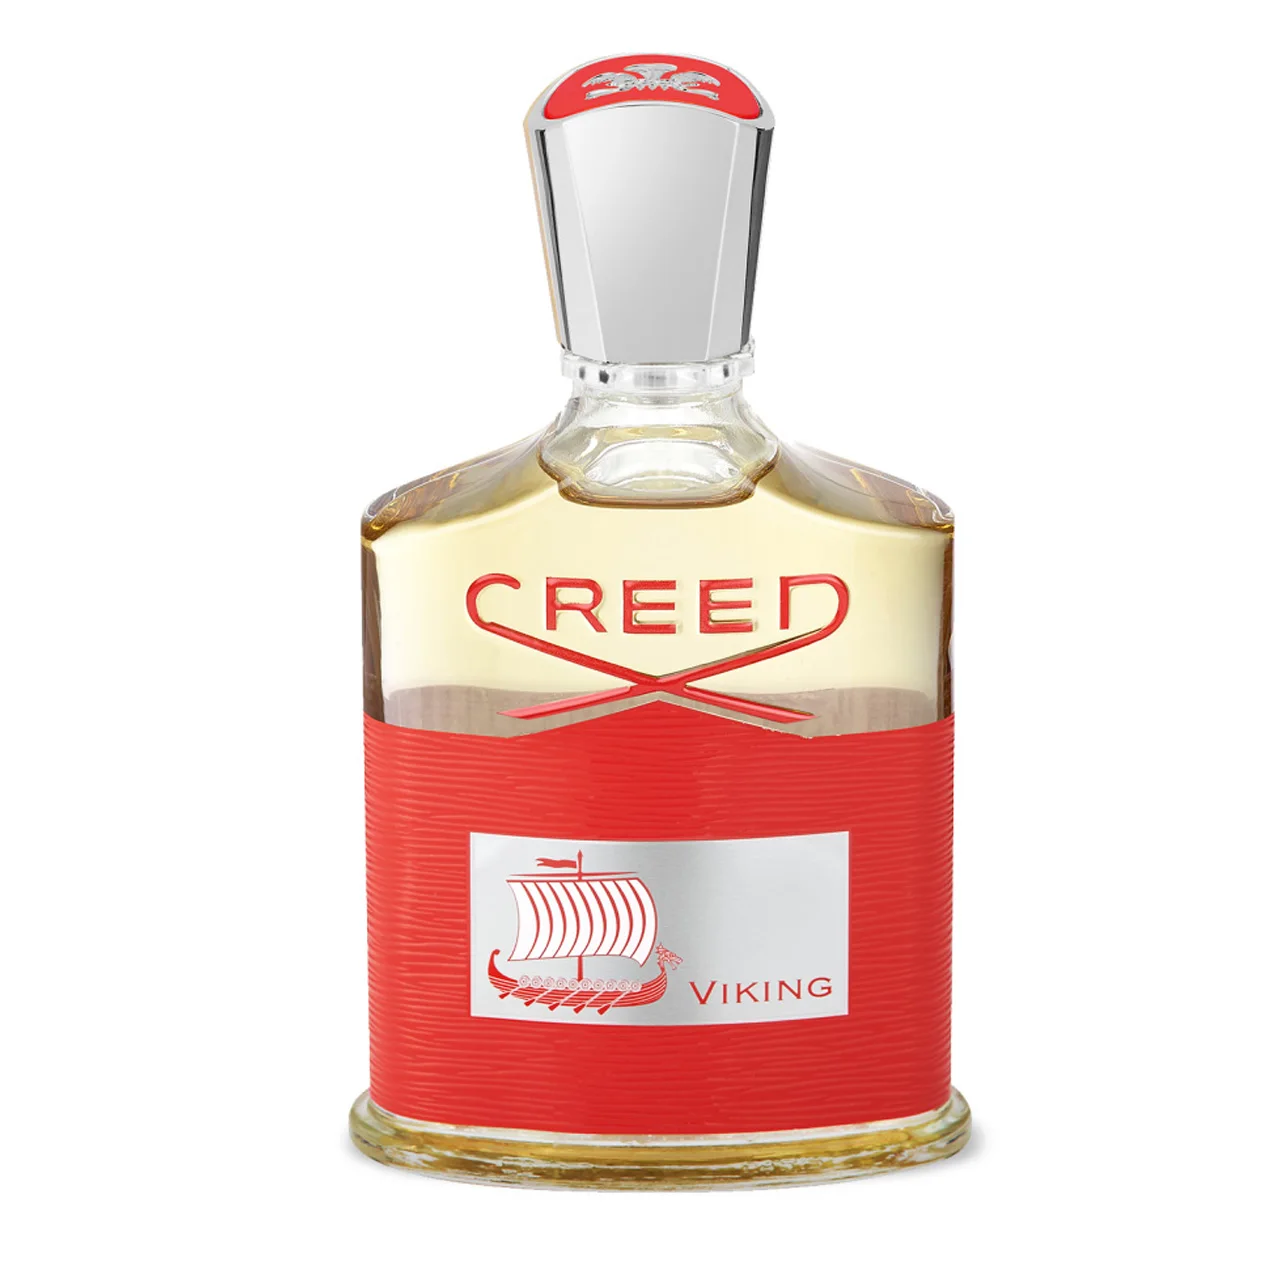 

NEW Creed Perfume Viking Cologne Eau de Parfum 100 ml Eau de Parfum fragrance men women long lasting smell perfume